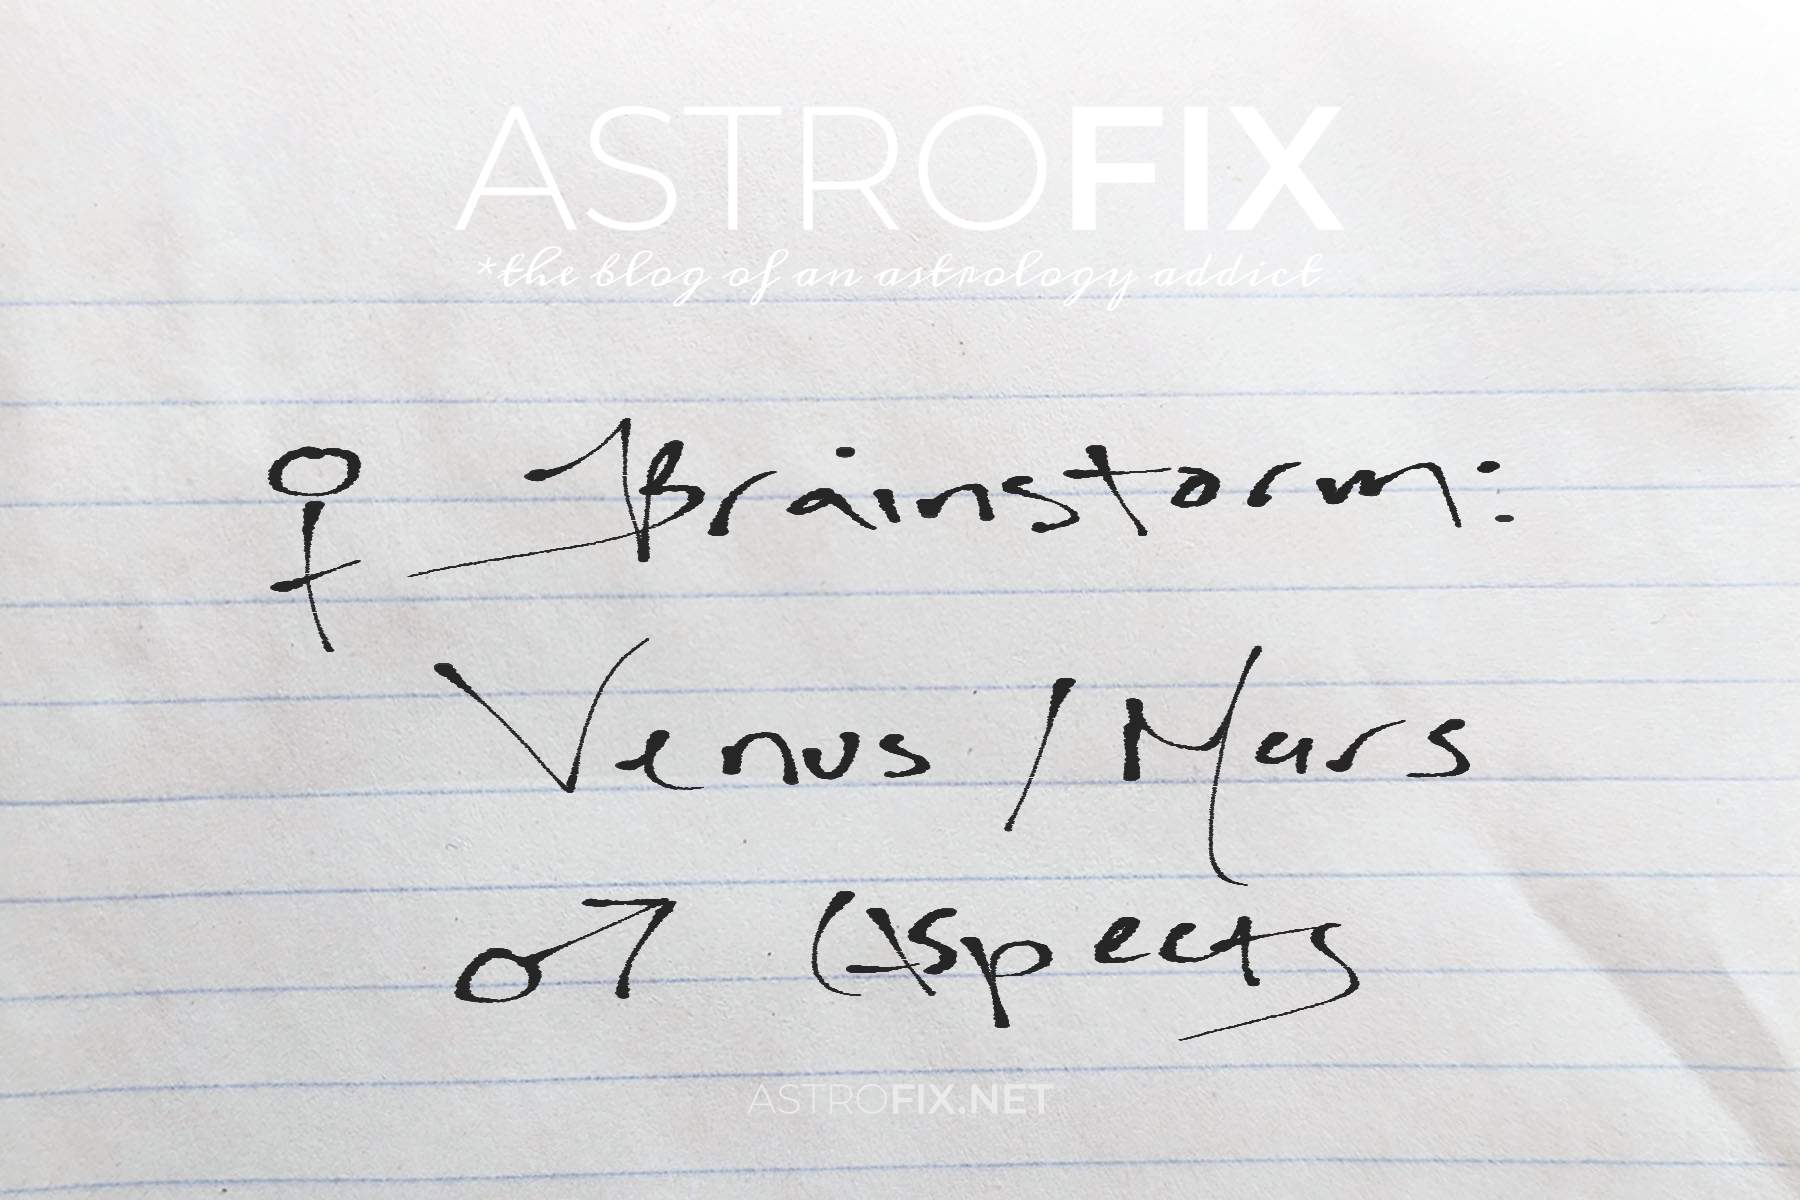 brainstorm-venus-mars-astrology-aspects